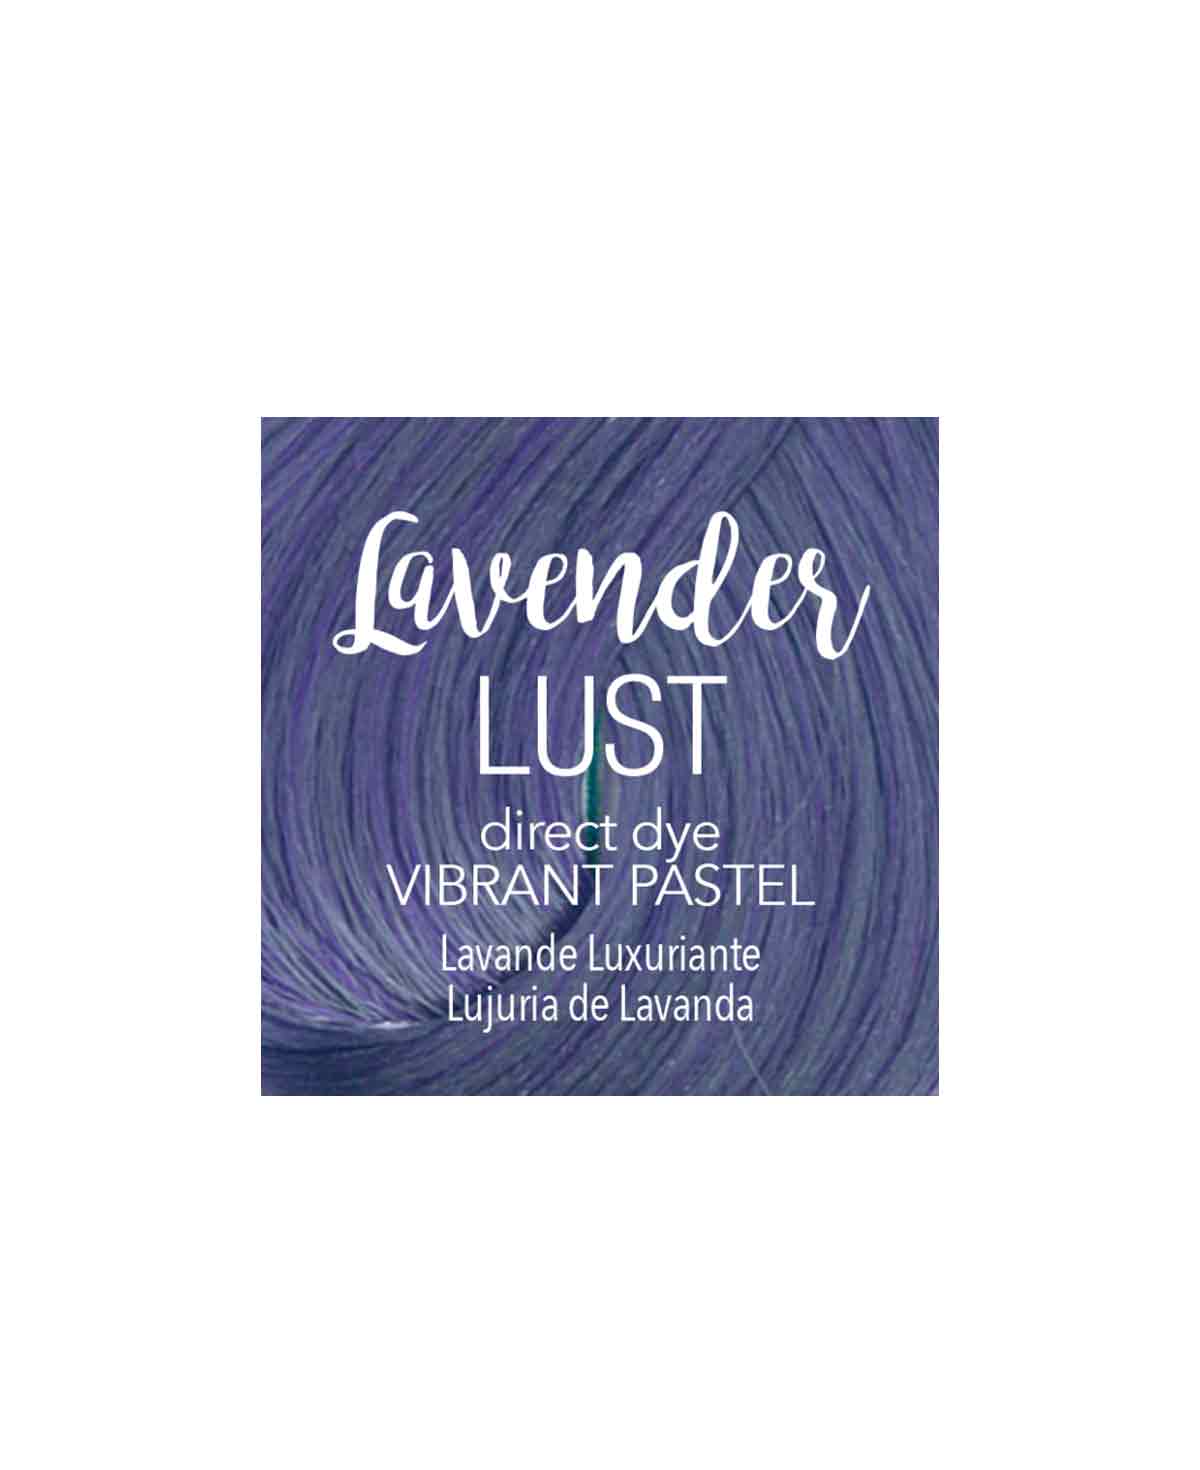 Mydentity - SPDD Lavender Lust 